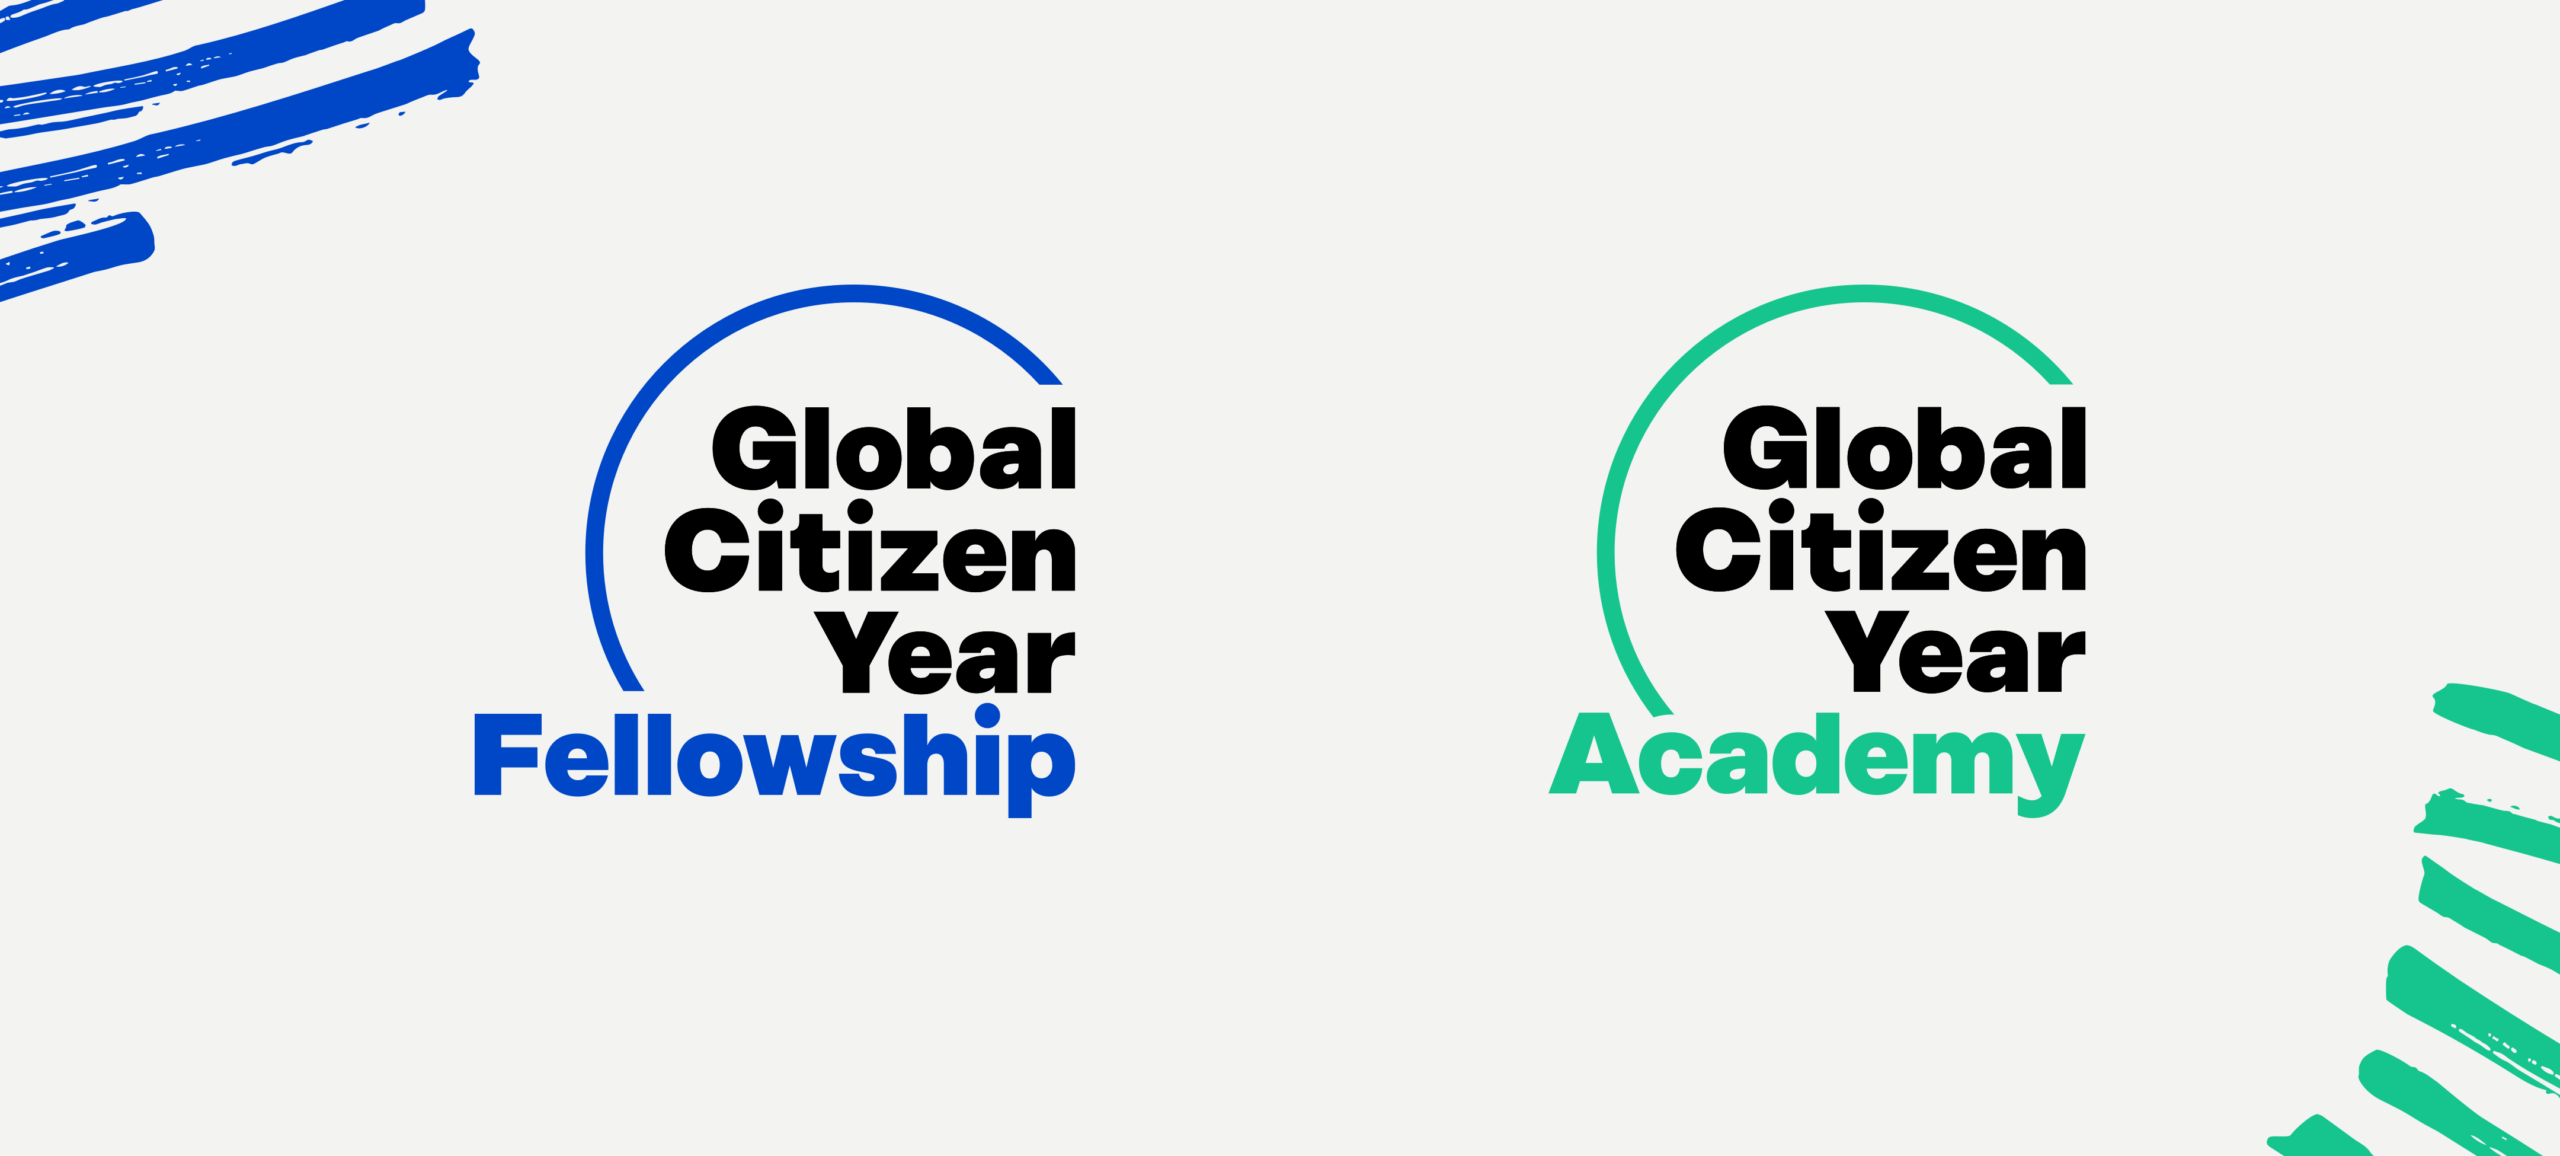 Global Citizen Year Fellowship and Academy